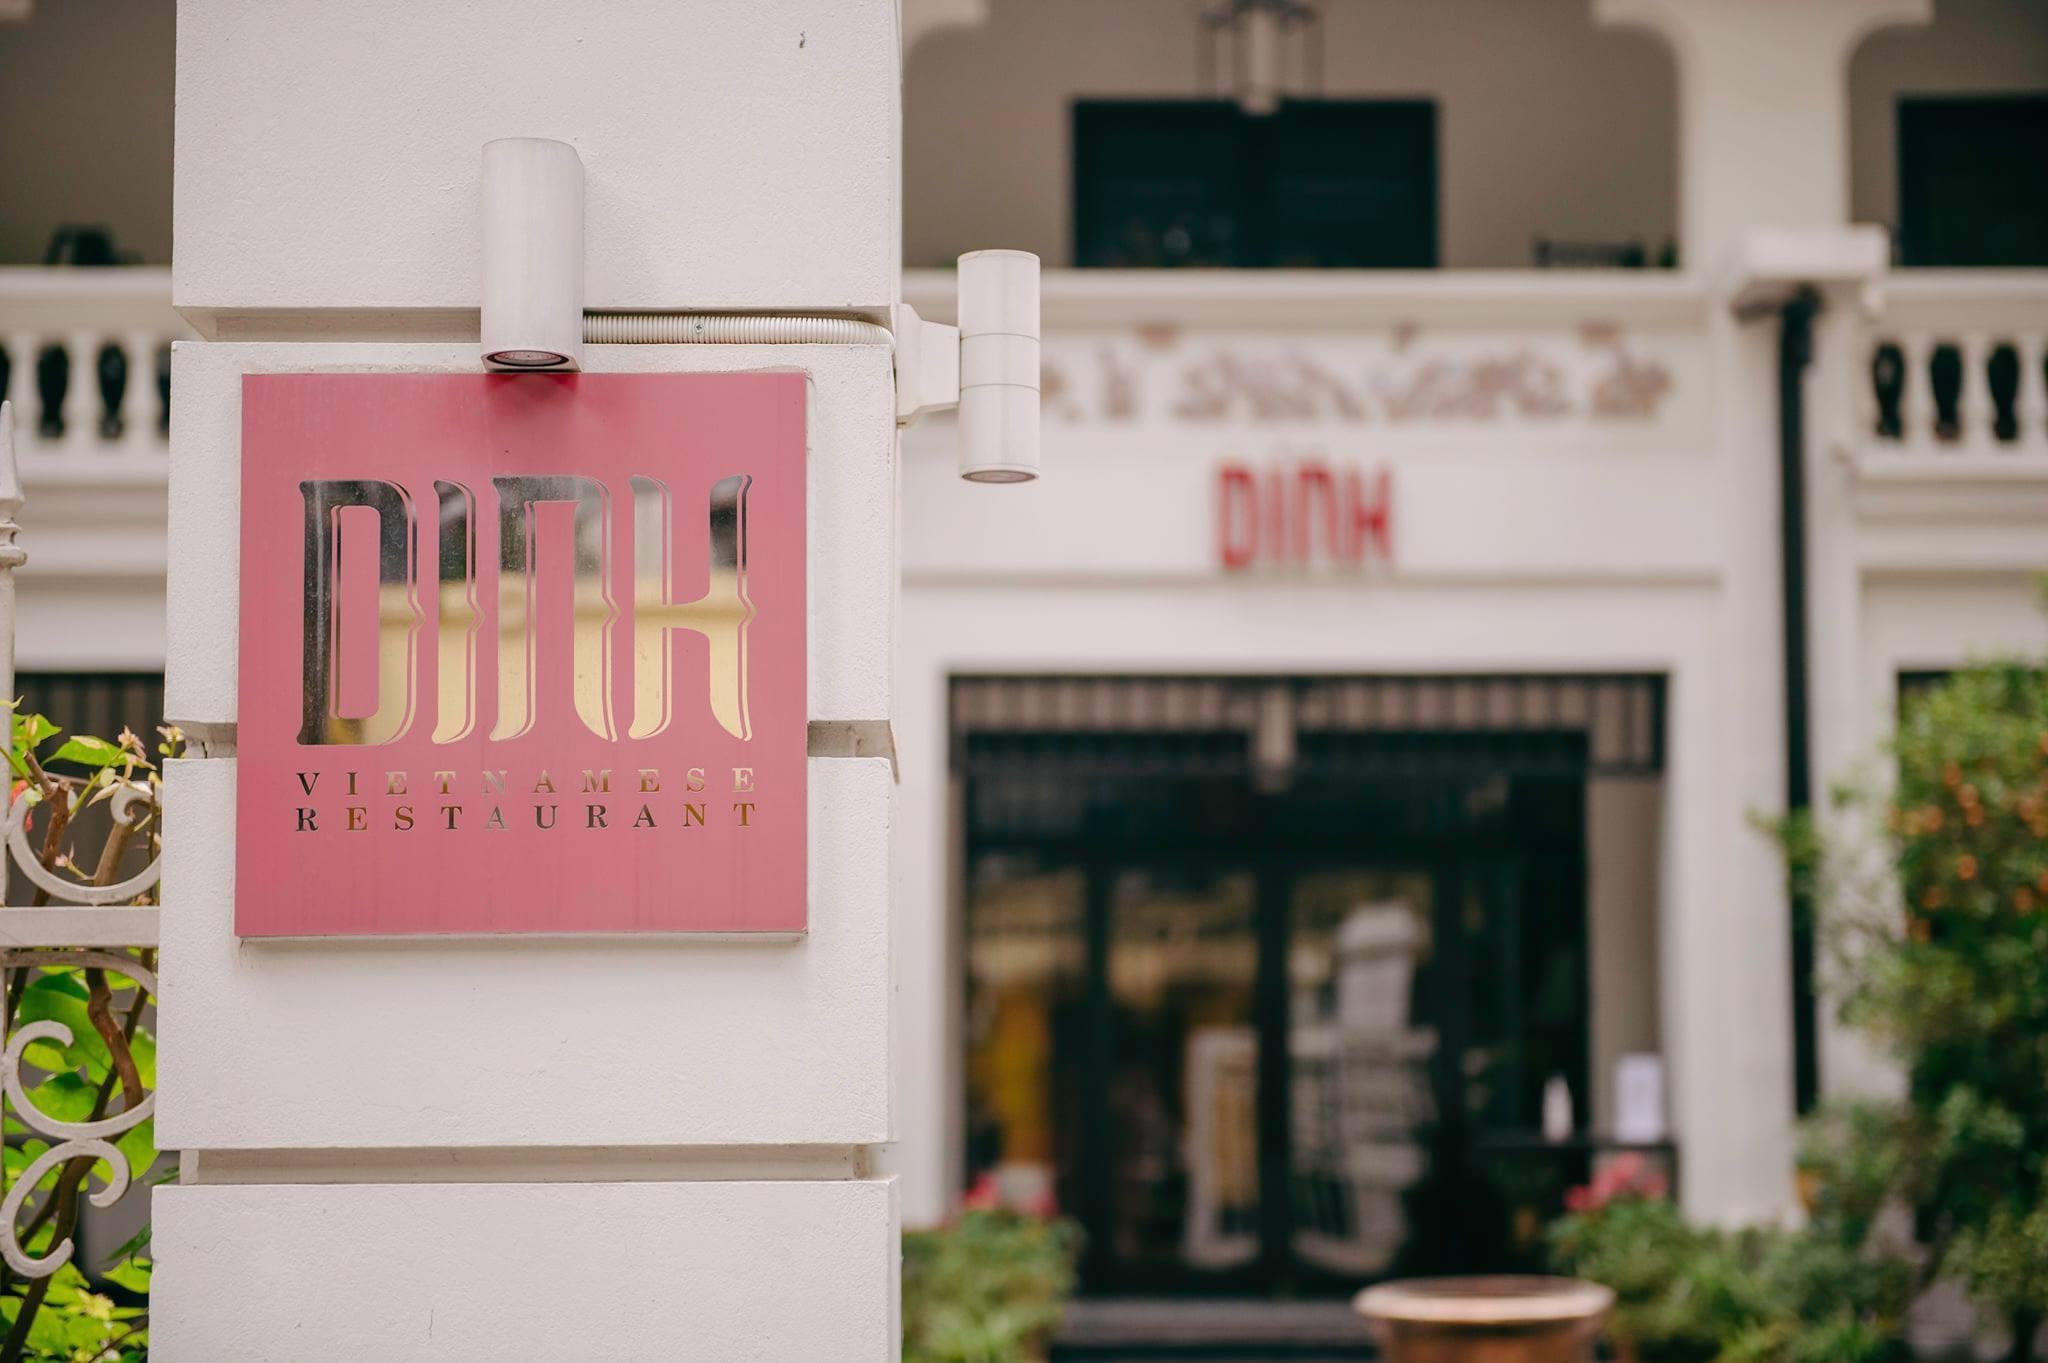 DINH Restaurant